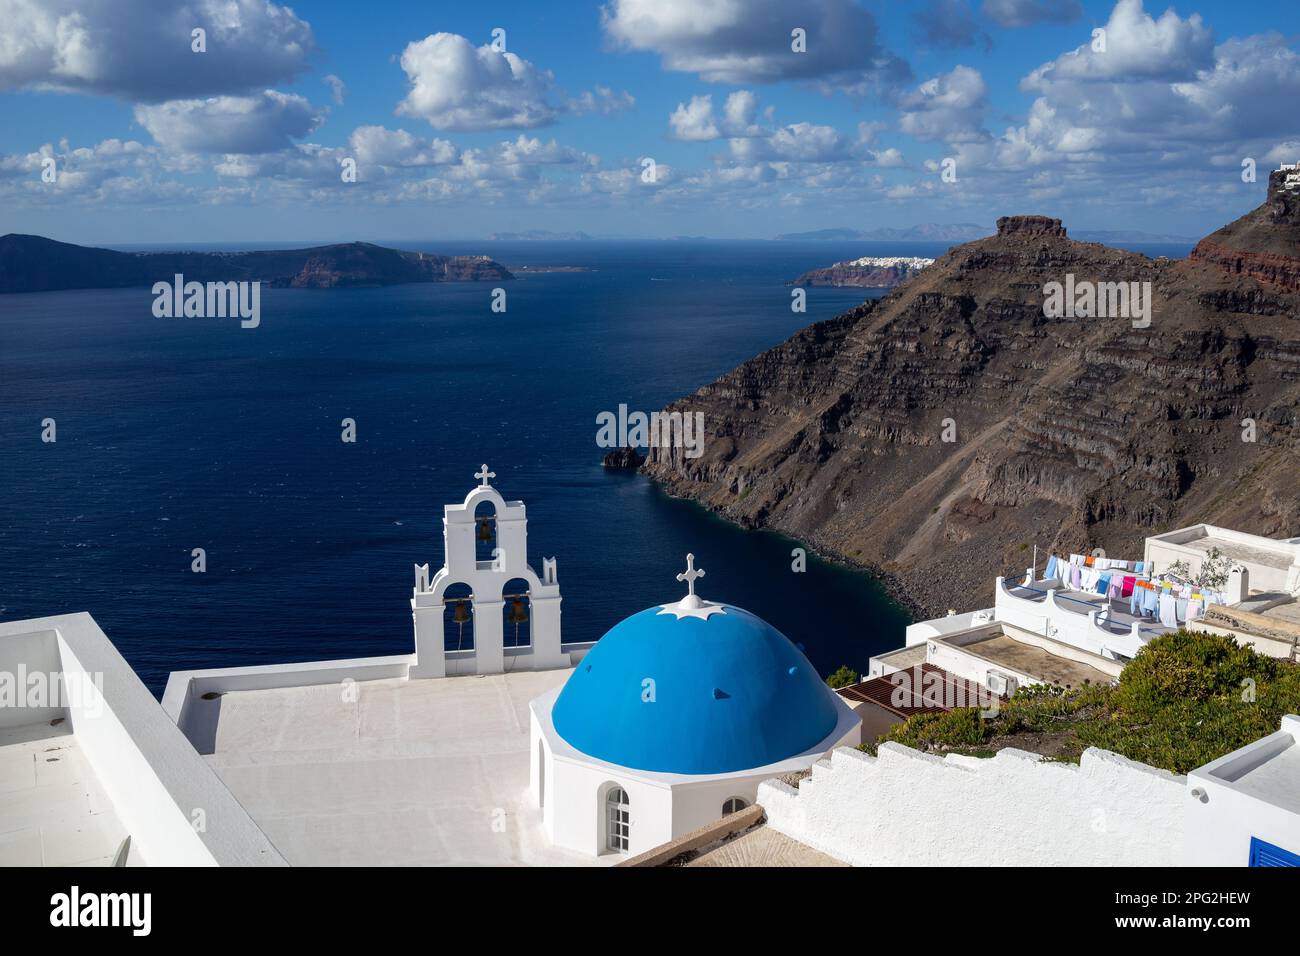 A blue-domed church atop a hillside overlooking the sea in Fira, Santorini, Greece. Stock Photo